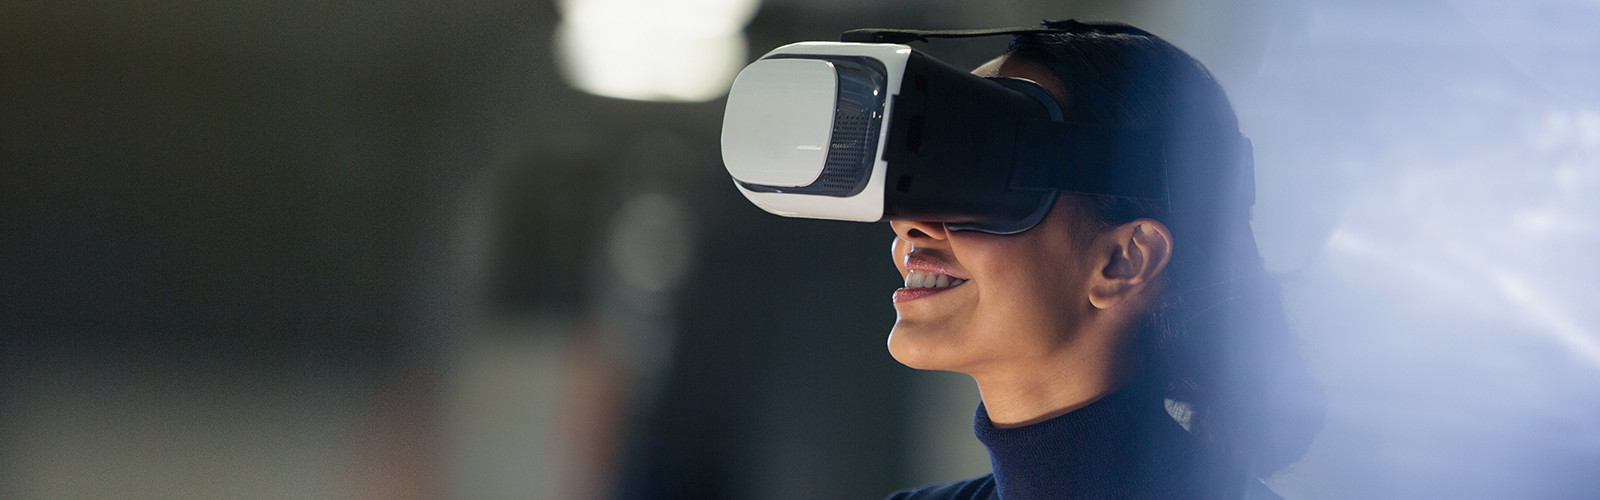 Girl wearing Virtual Reality glasses